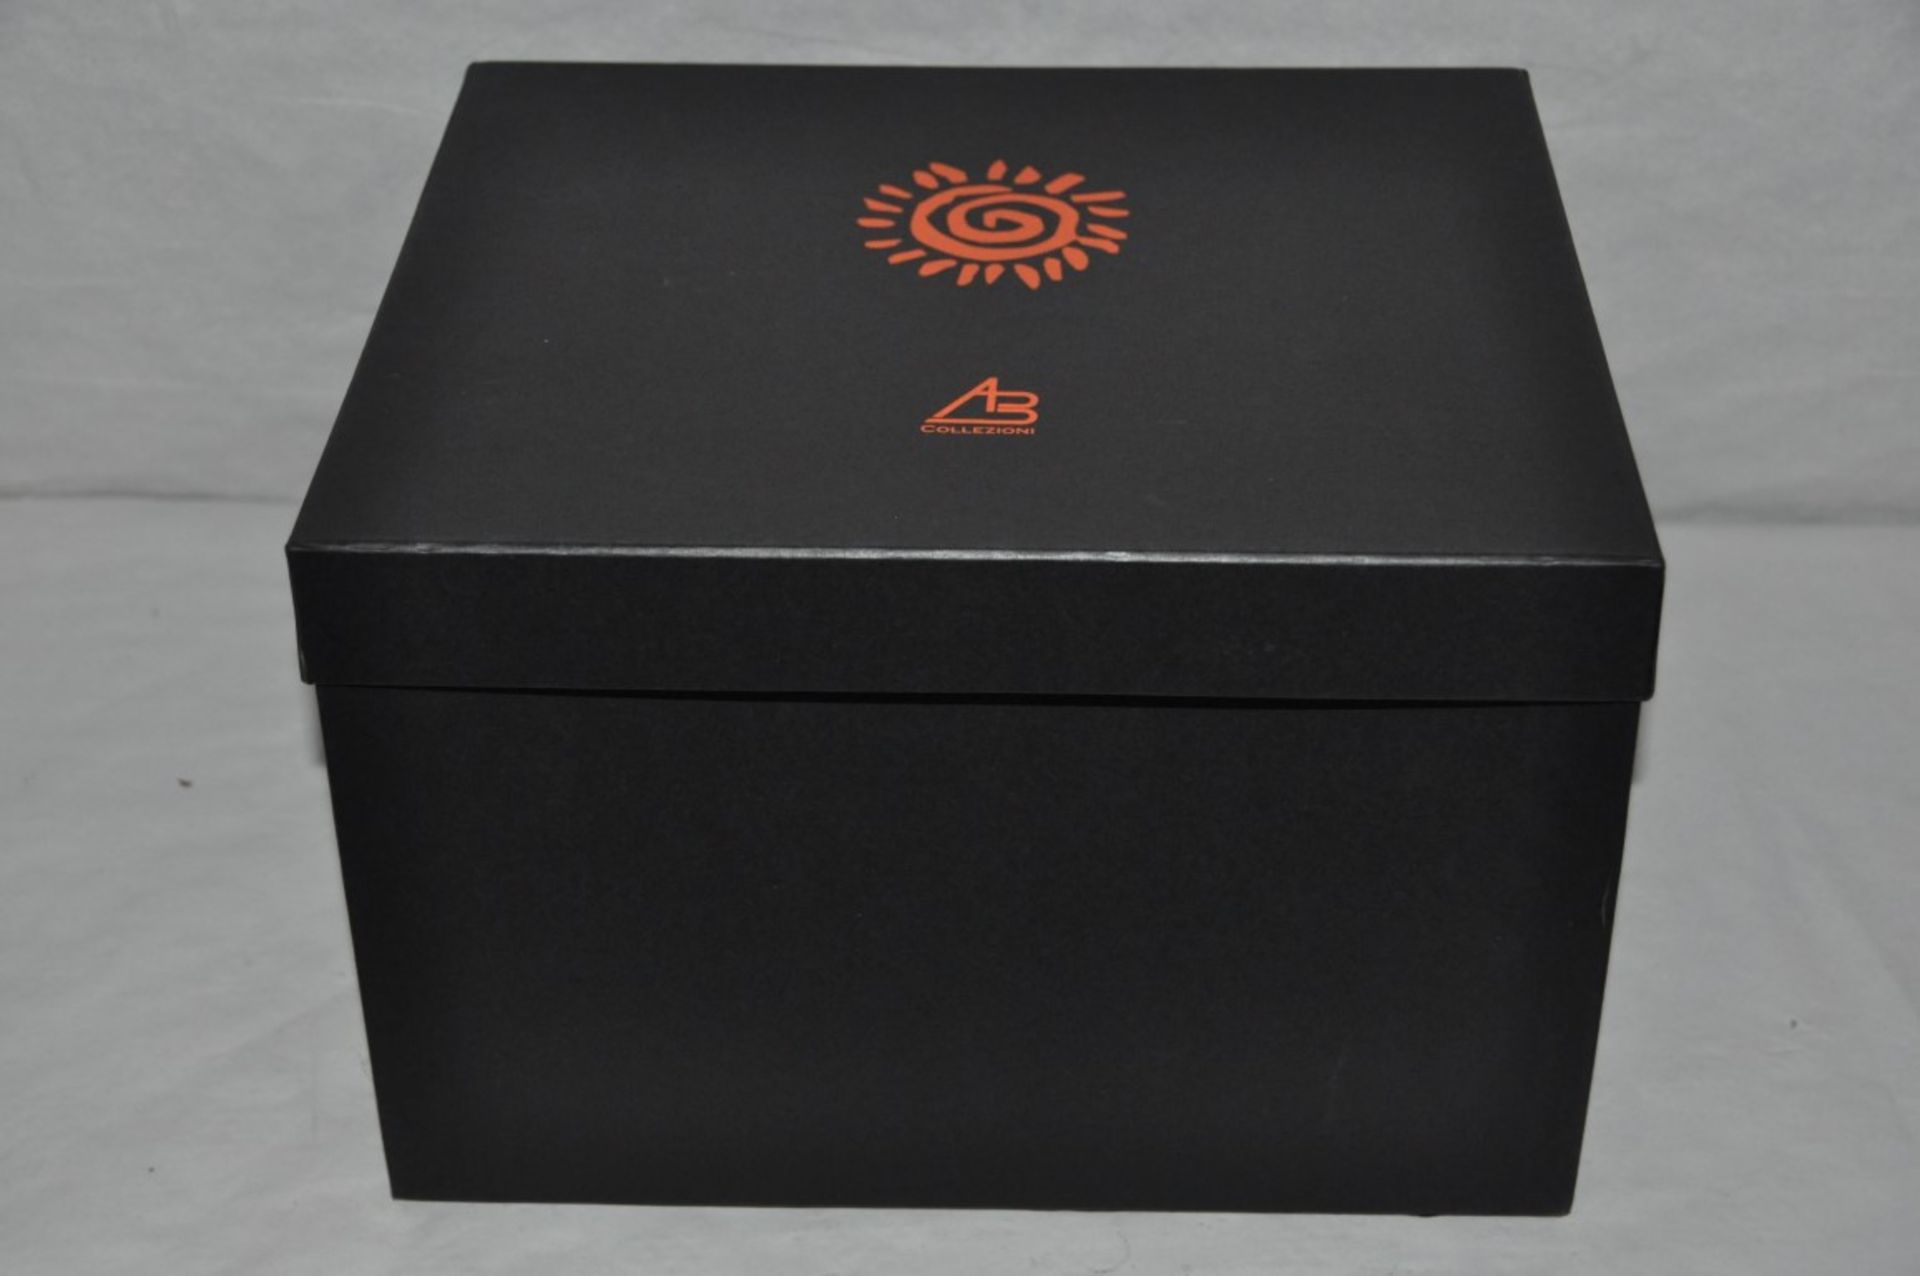 1 x "AB Collezioni" Italian Luxury Automatic Watch Case In Tan (30049M) - Ref LT105  – Italian - Image 6 of 6